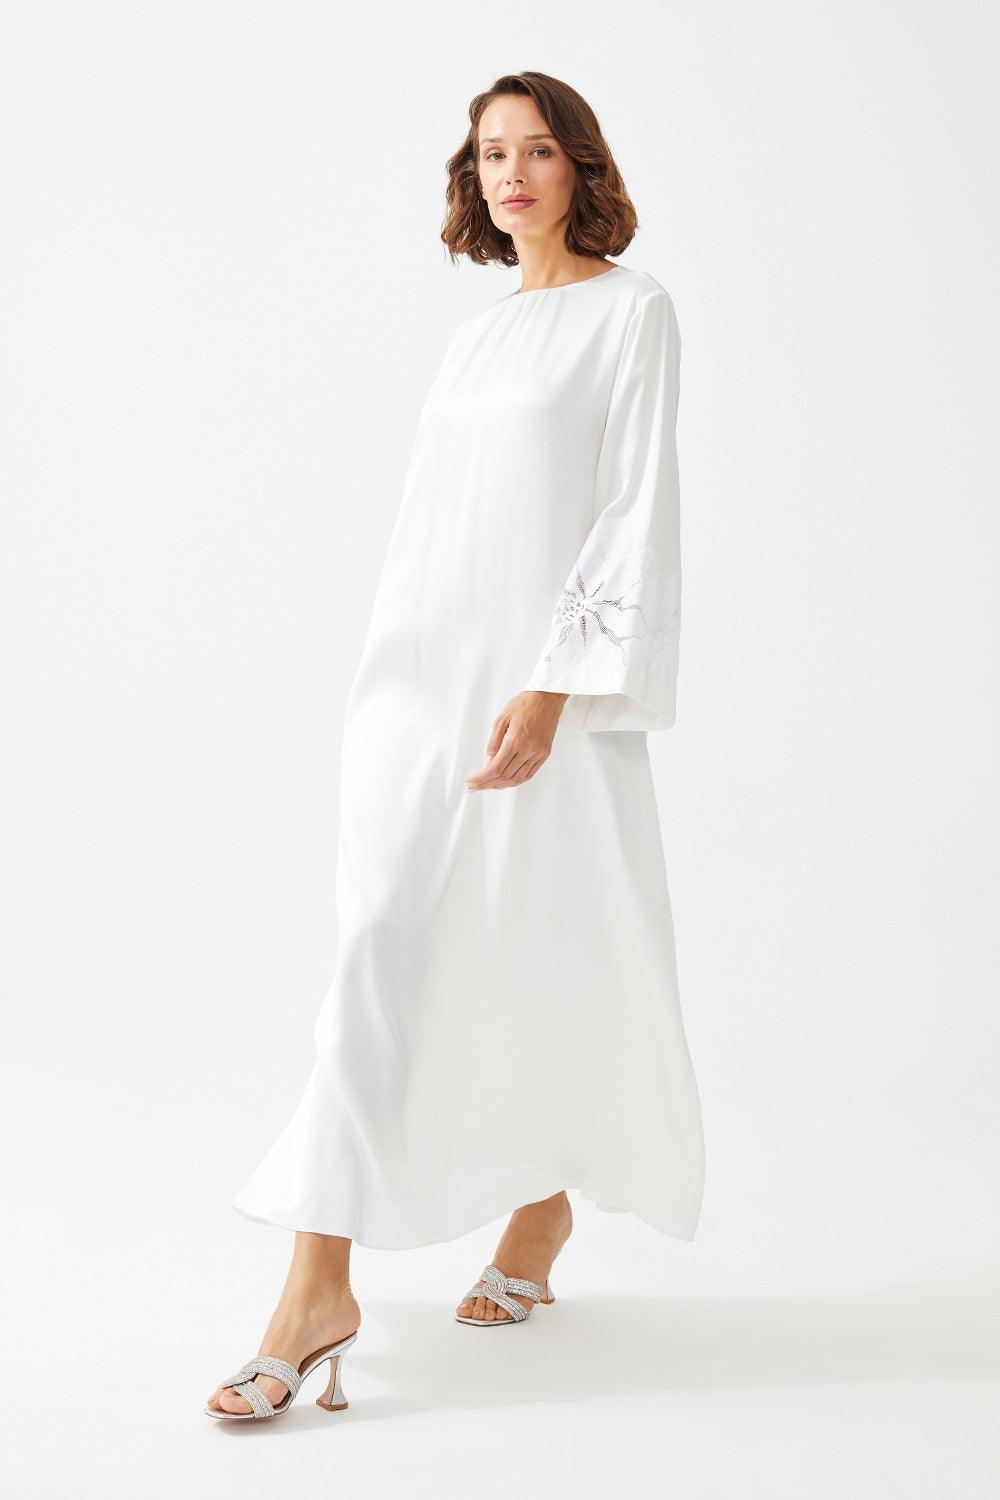 Tuba Long Rayon Trimmed Dress - Off White - Bocan